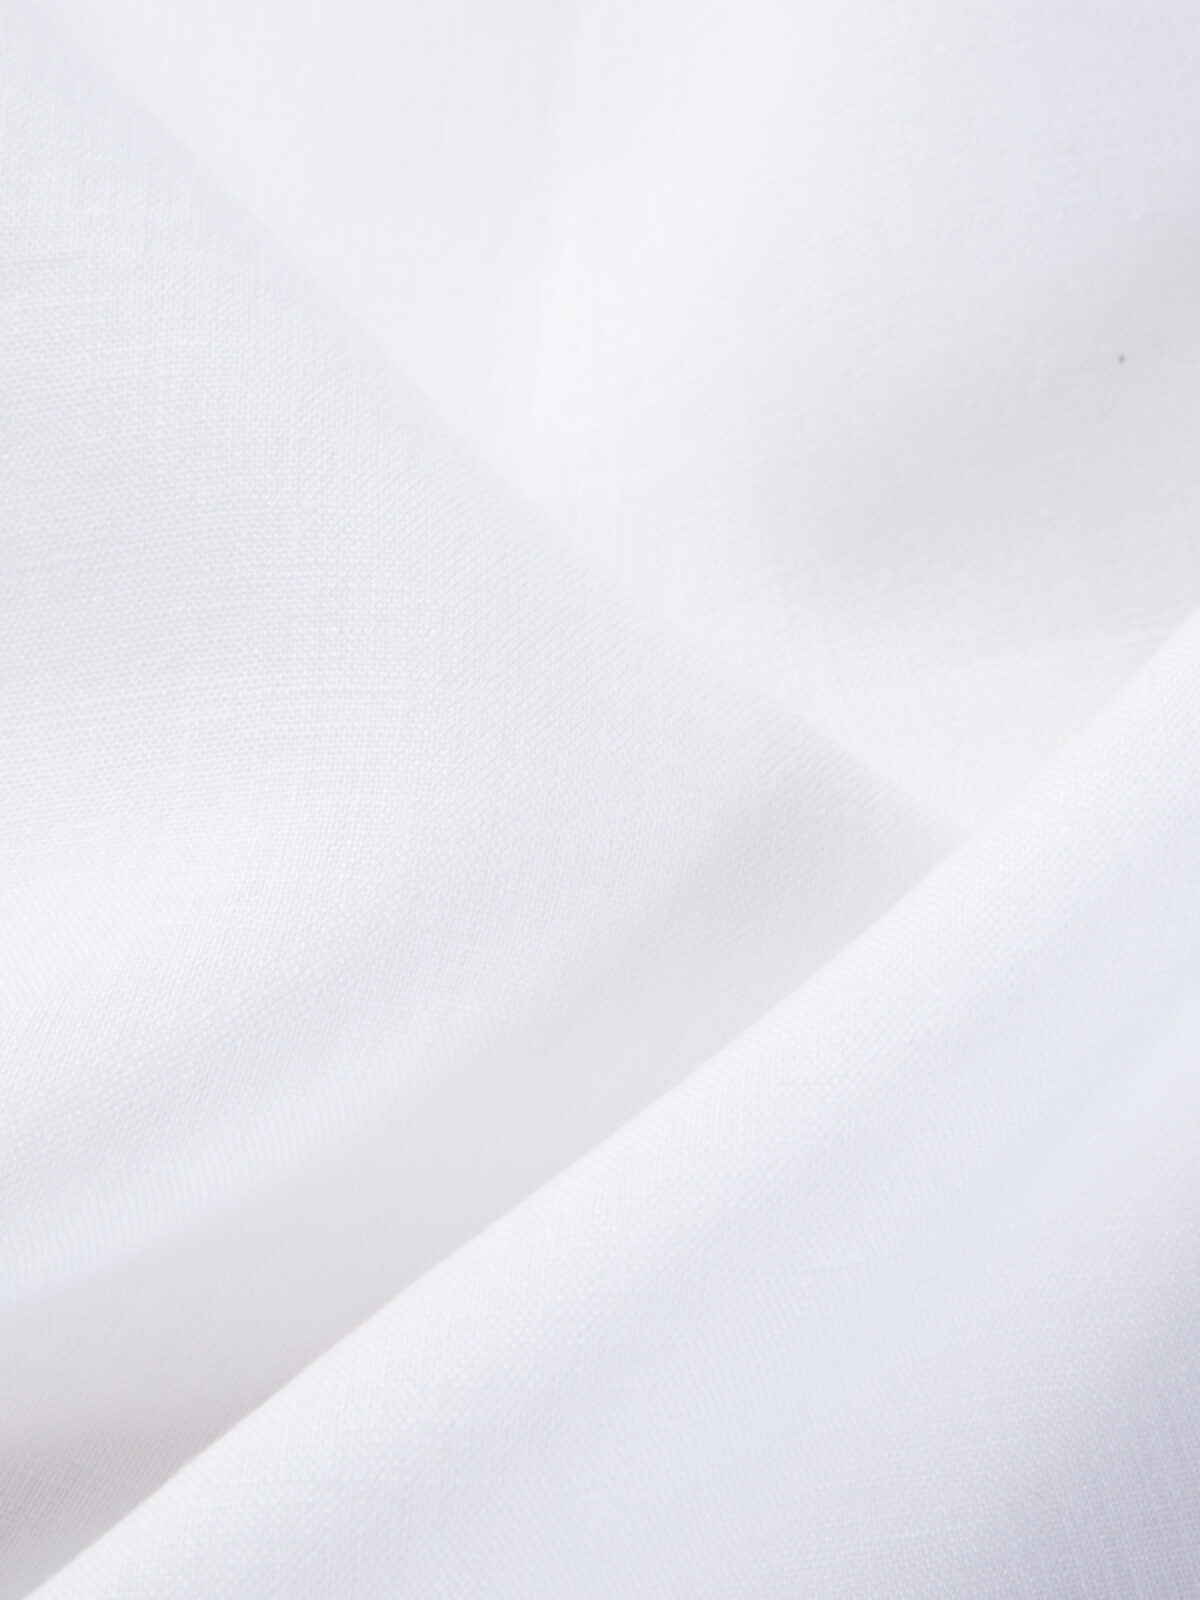 Length of Very Sheer Linen Cloth, New Kingdom